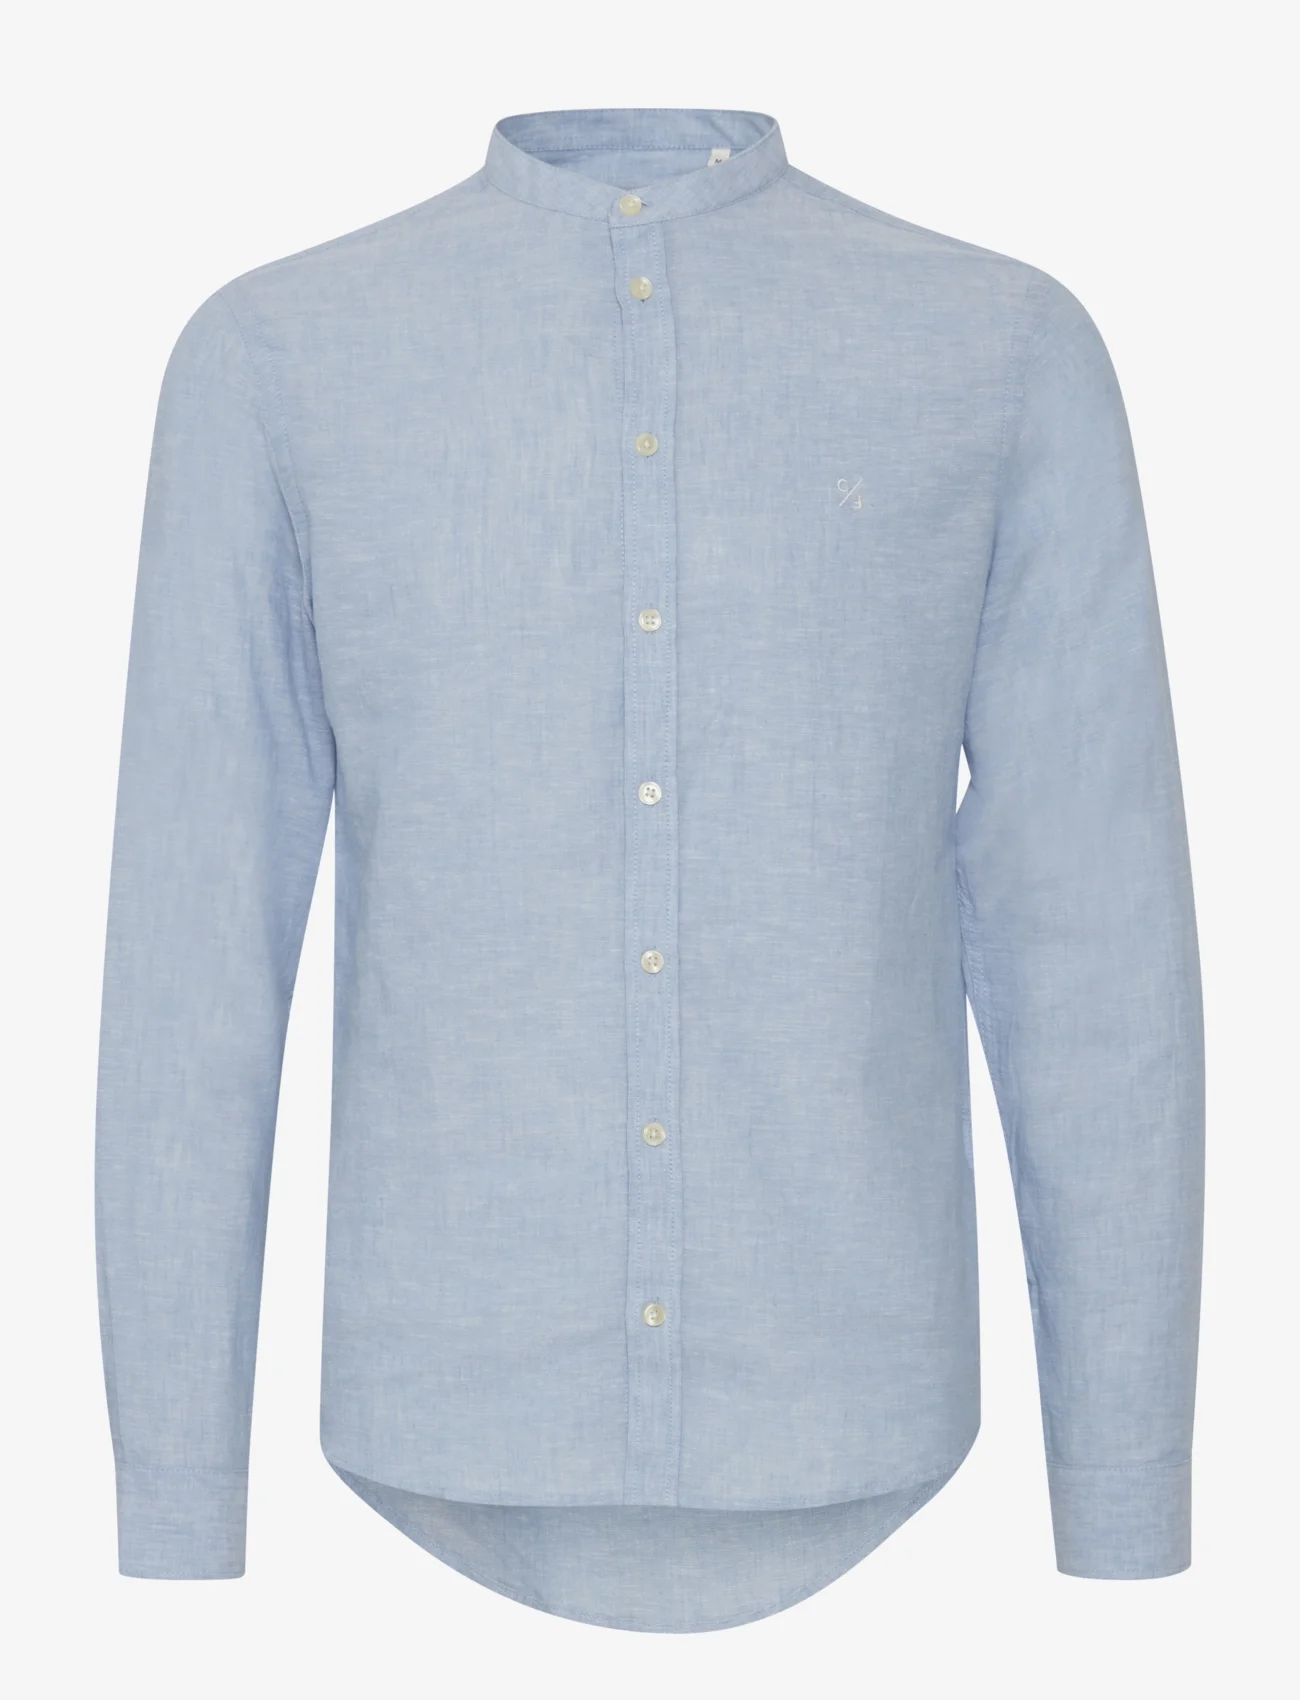 Casual Friday - CFAnton 0053 CC LS linen mix shirt - leinenhemden - silver lake blue - 0